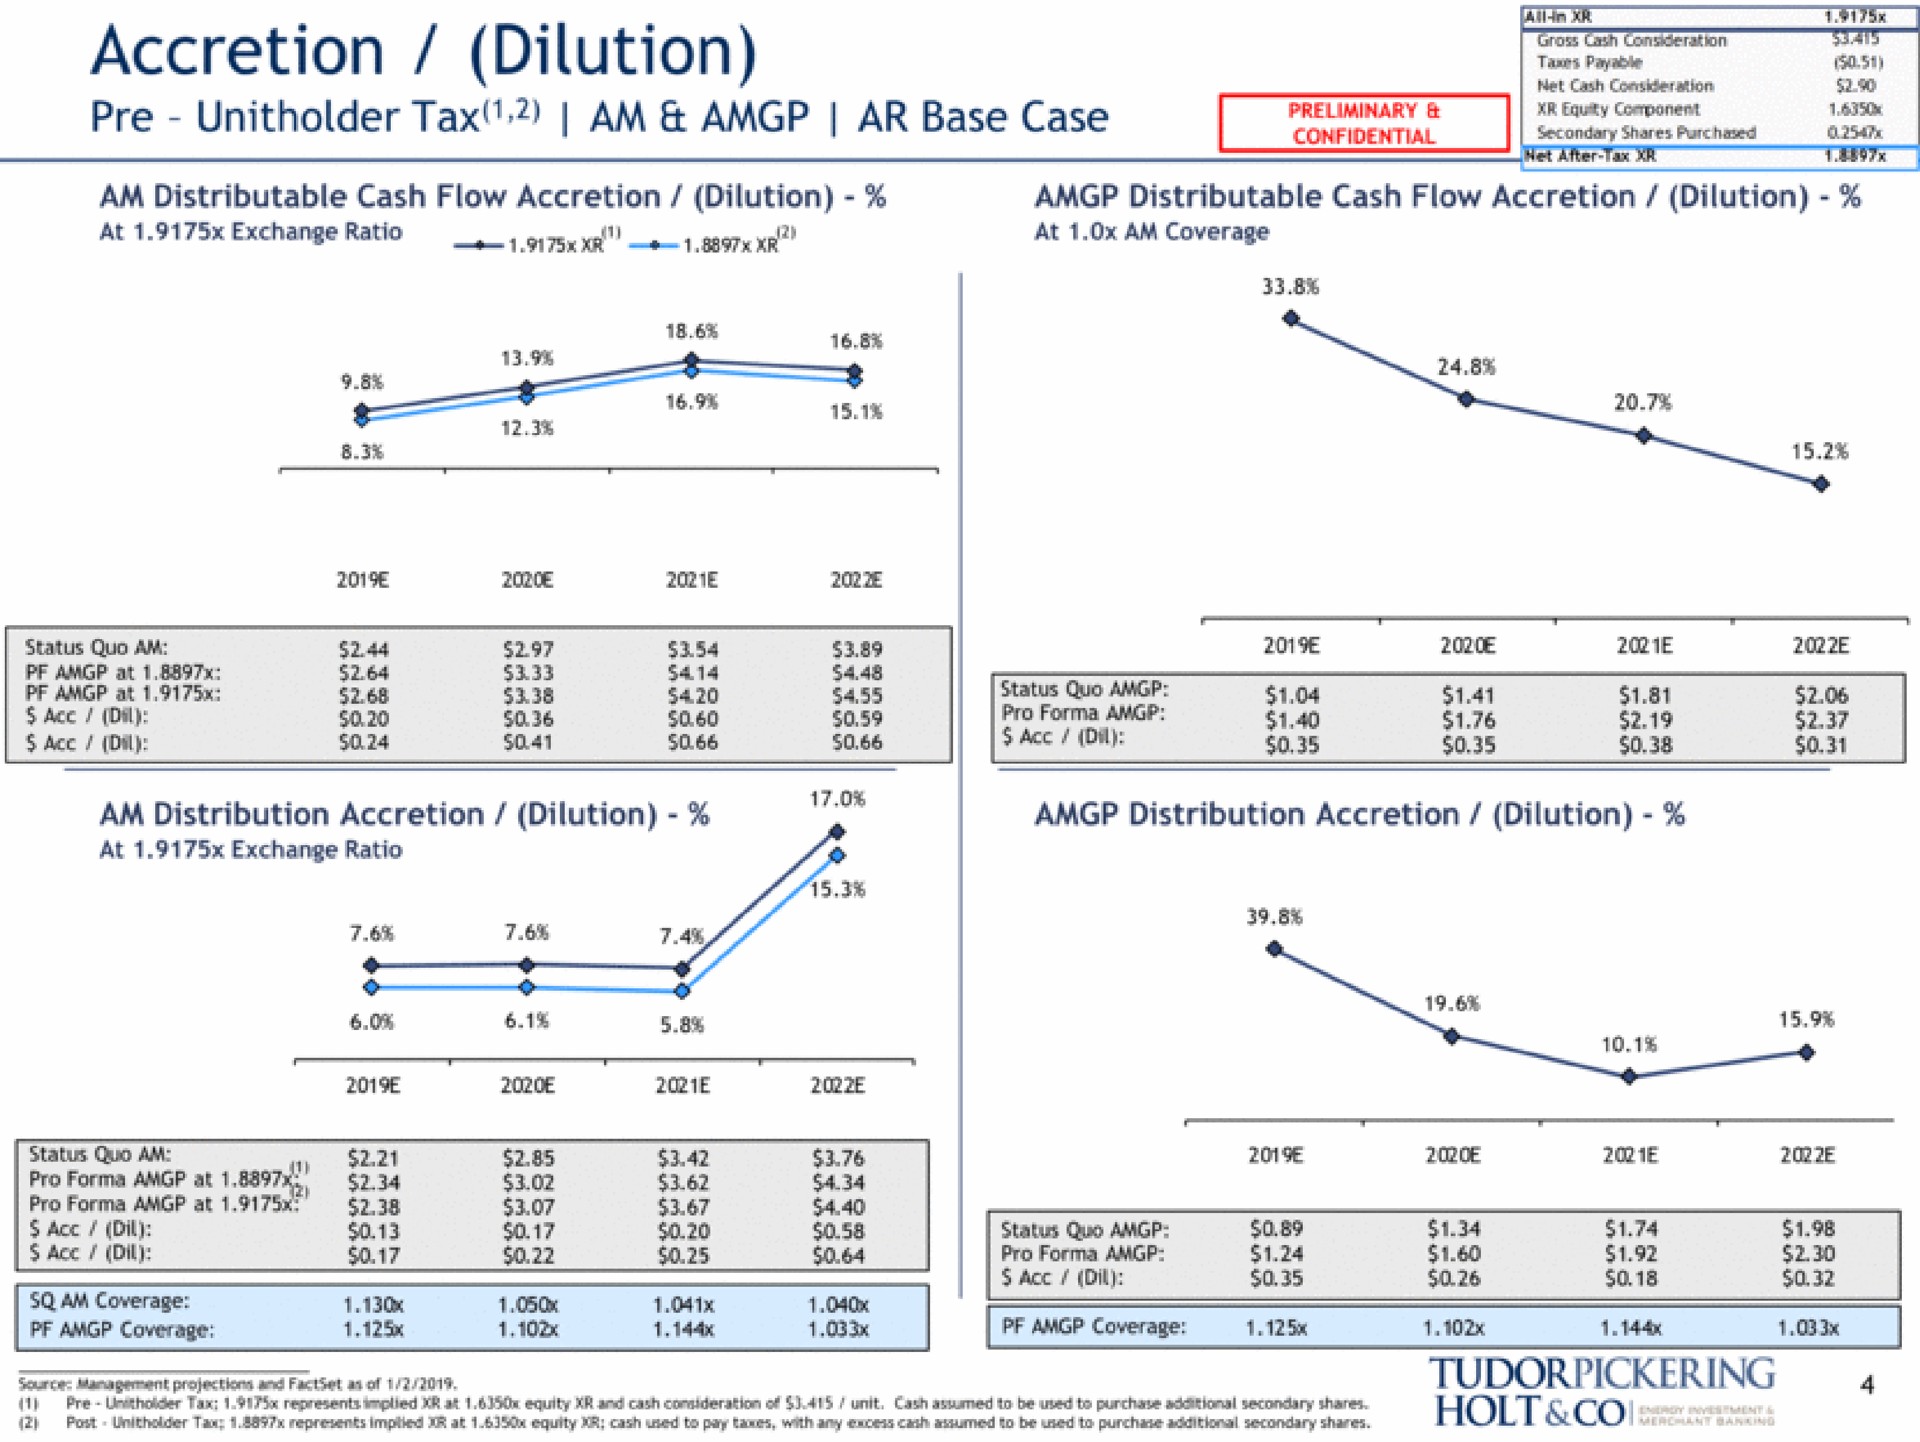 accretion dilution tax am base case ace am distribution accretion dilution | Tudor, Pickering, Holt & Co